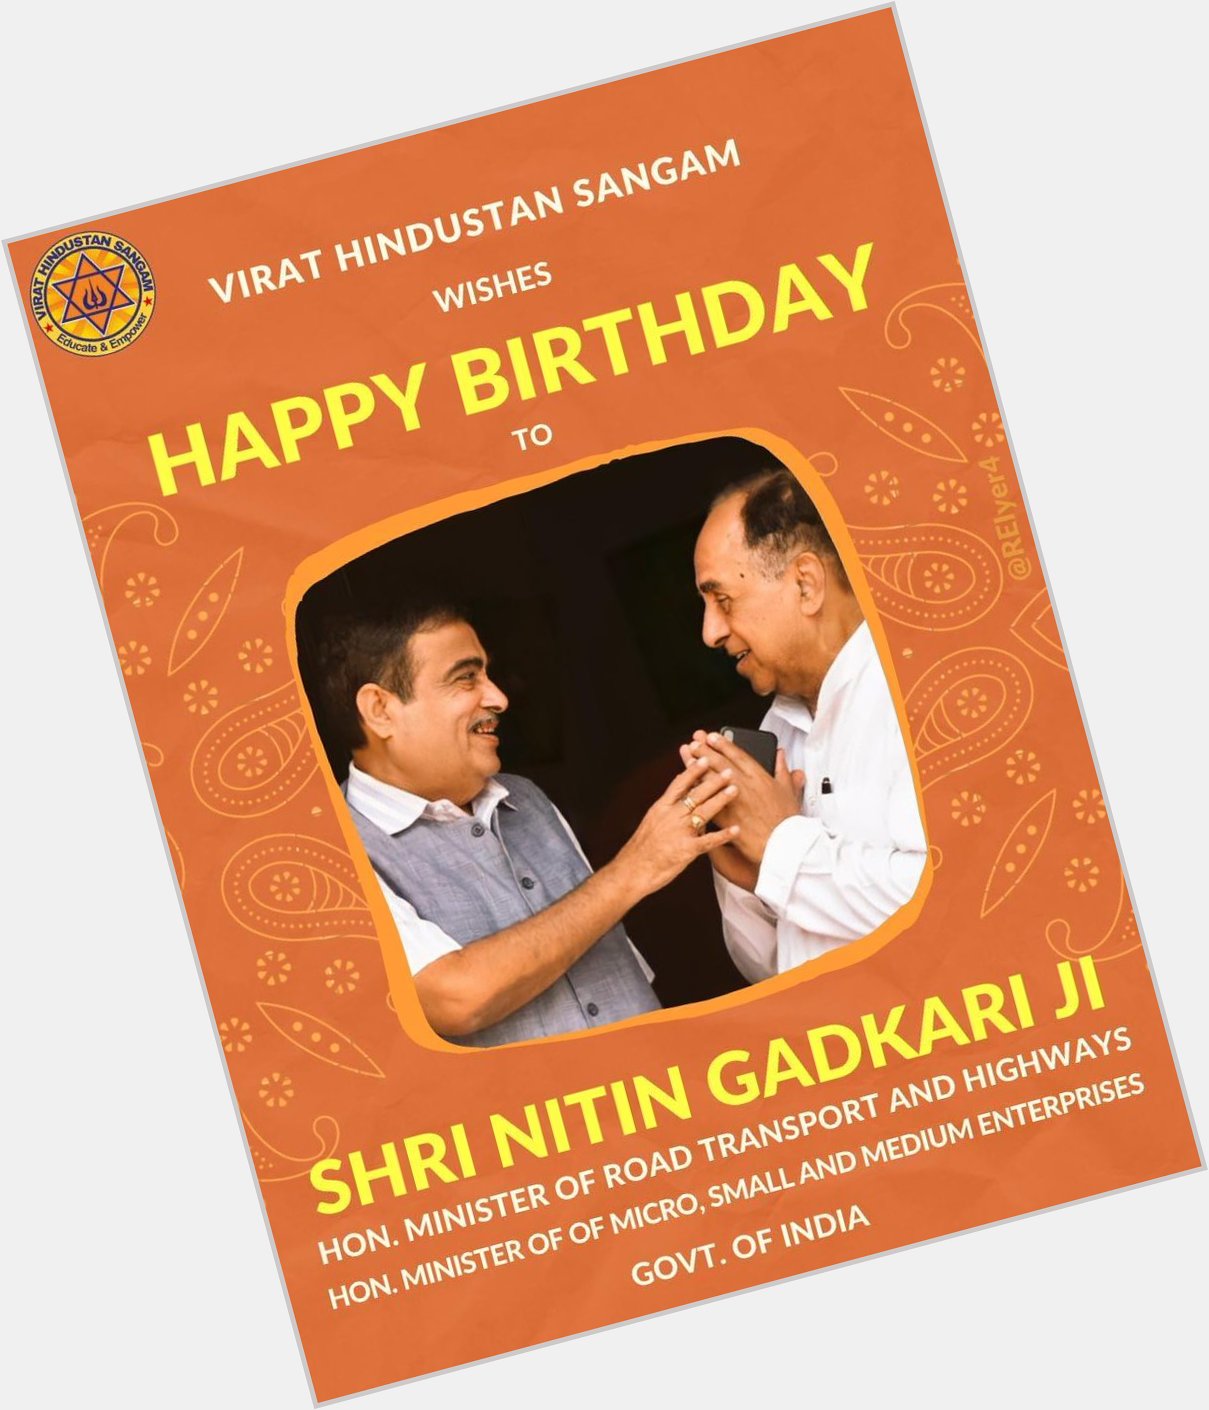   wishes Happy Birthday to Sri ji  